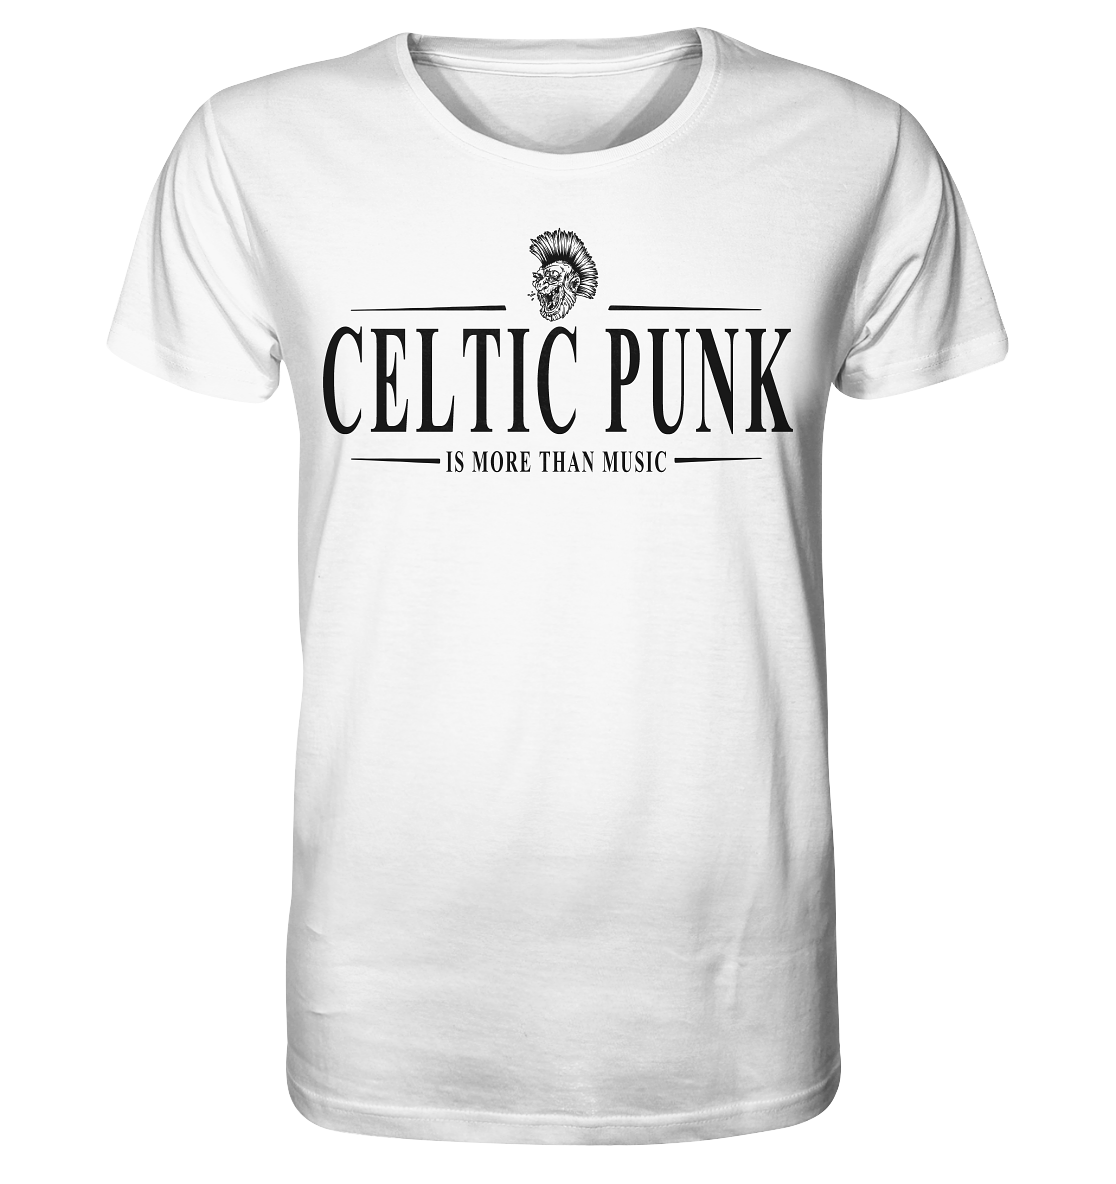 Celtic Punk "Is More Than Music" - Organic Shirt